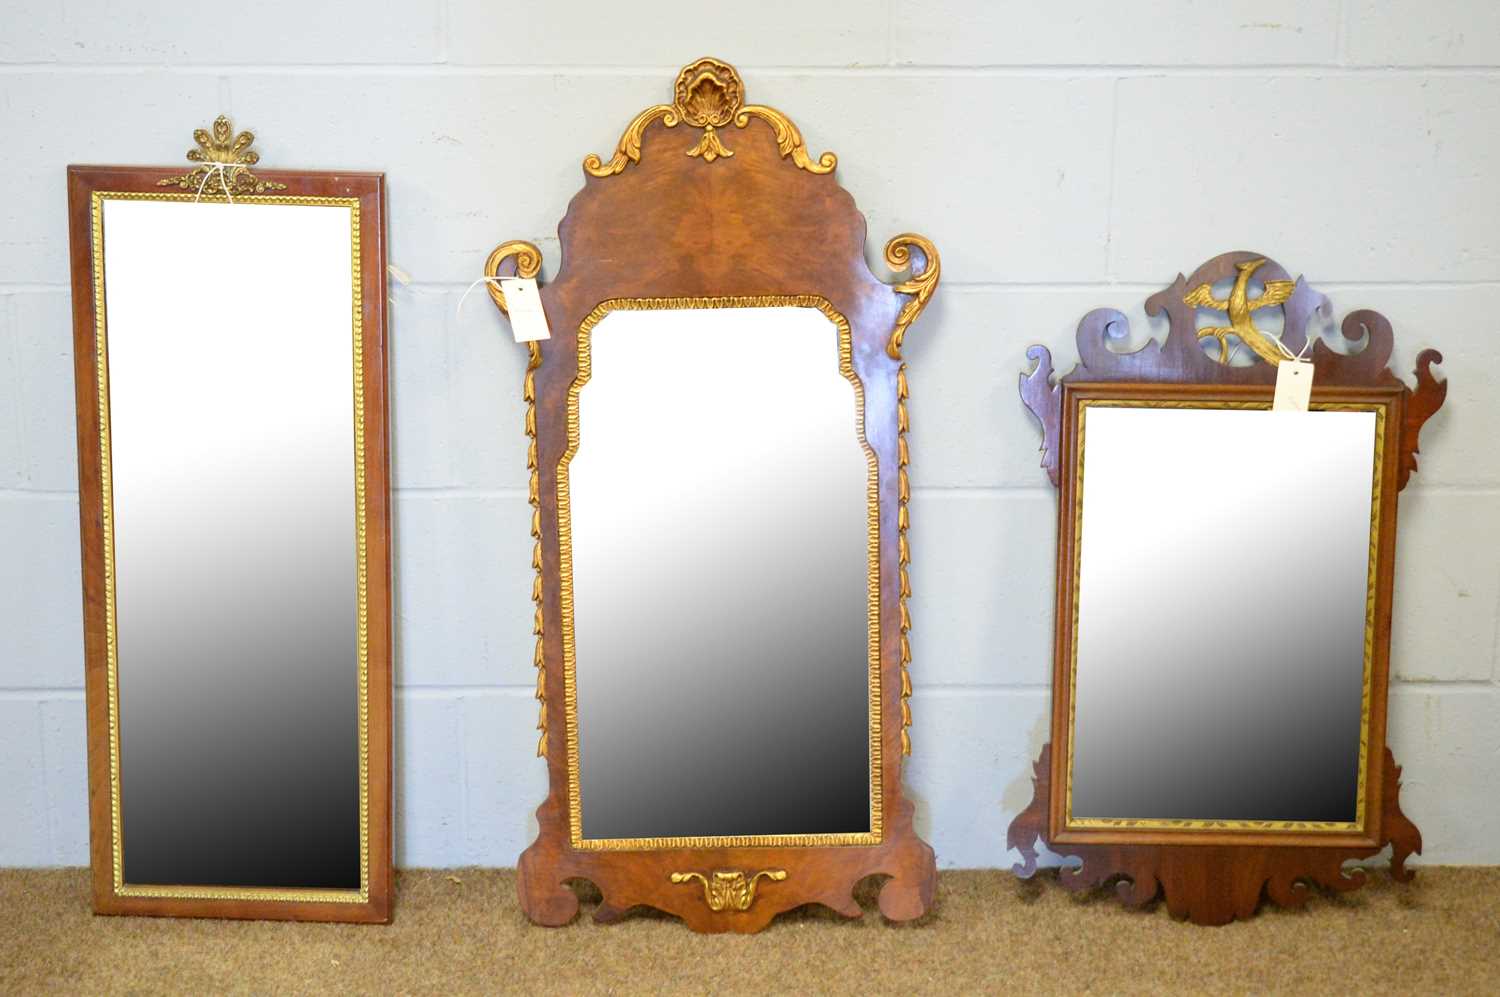 Three decorative wall mirrors